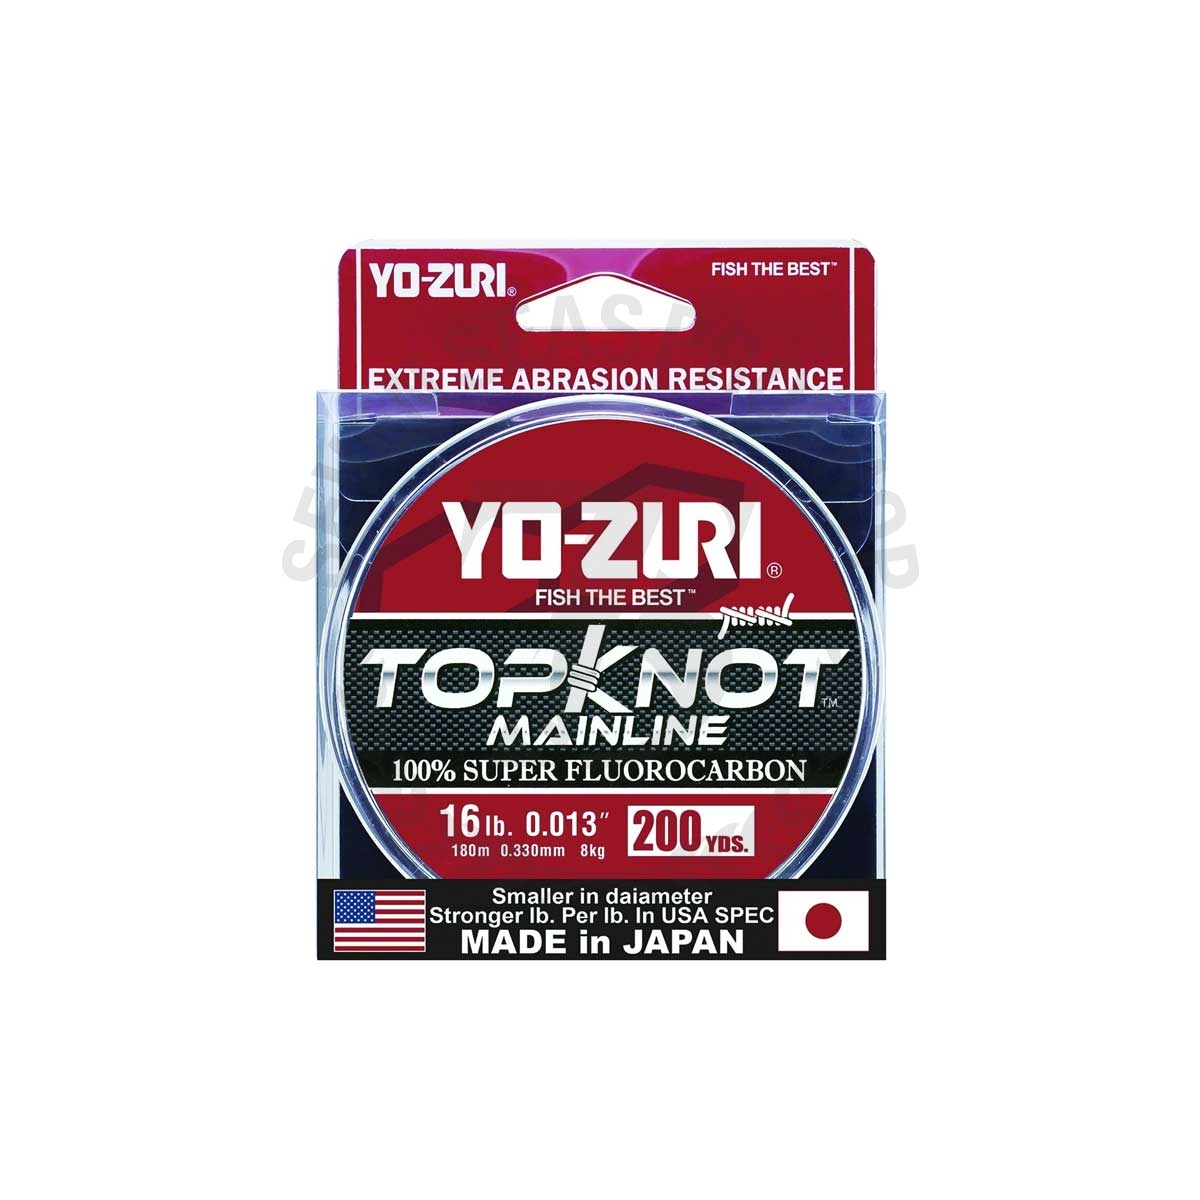 Yo-Zuri Top Knot Mainline 100% Super Fluorocarbon 200yds #R1223-16lbs.  (Natural Clear)*สายเอ็นฟลูออโรคาร์บอน - 7 SEAS PROSHOP (THAILAND)